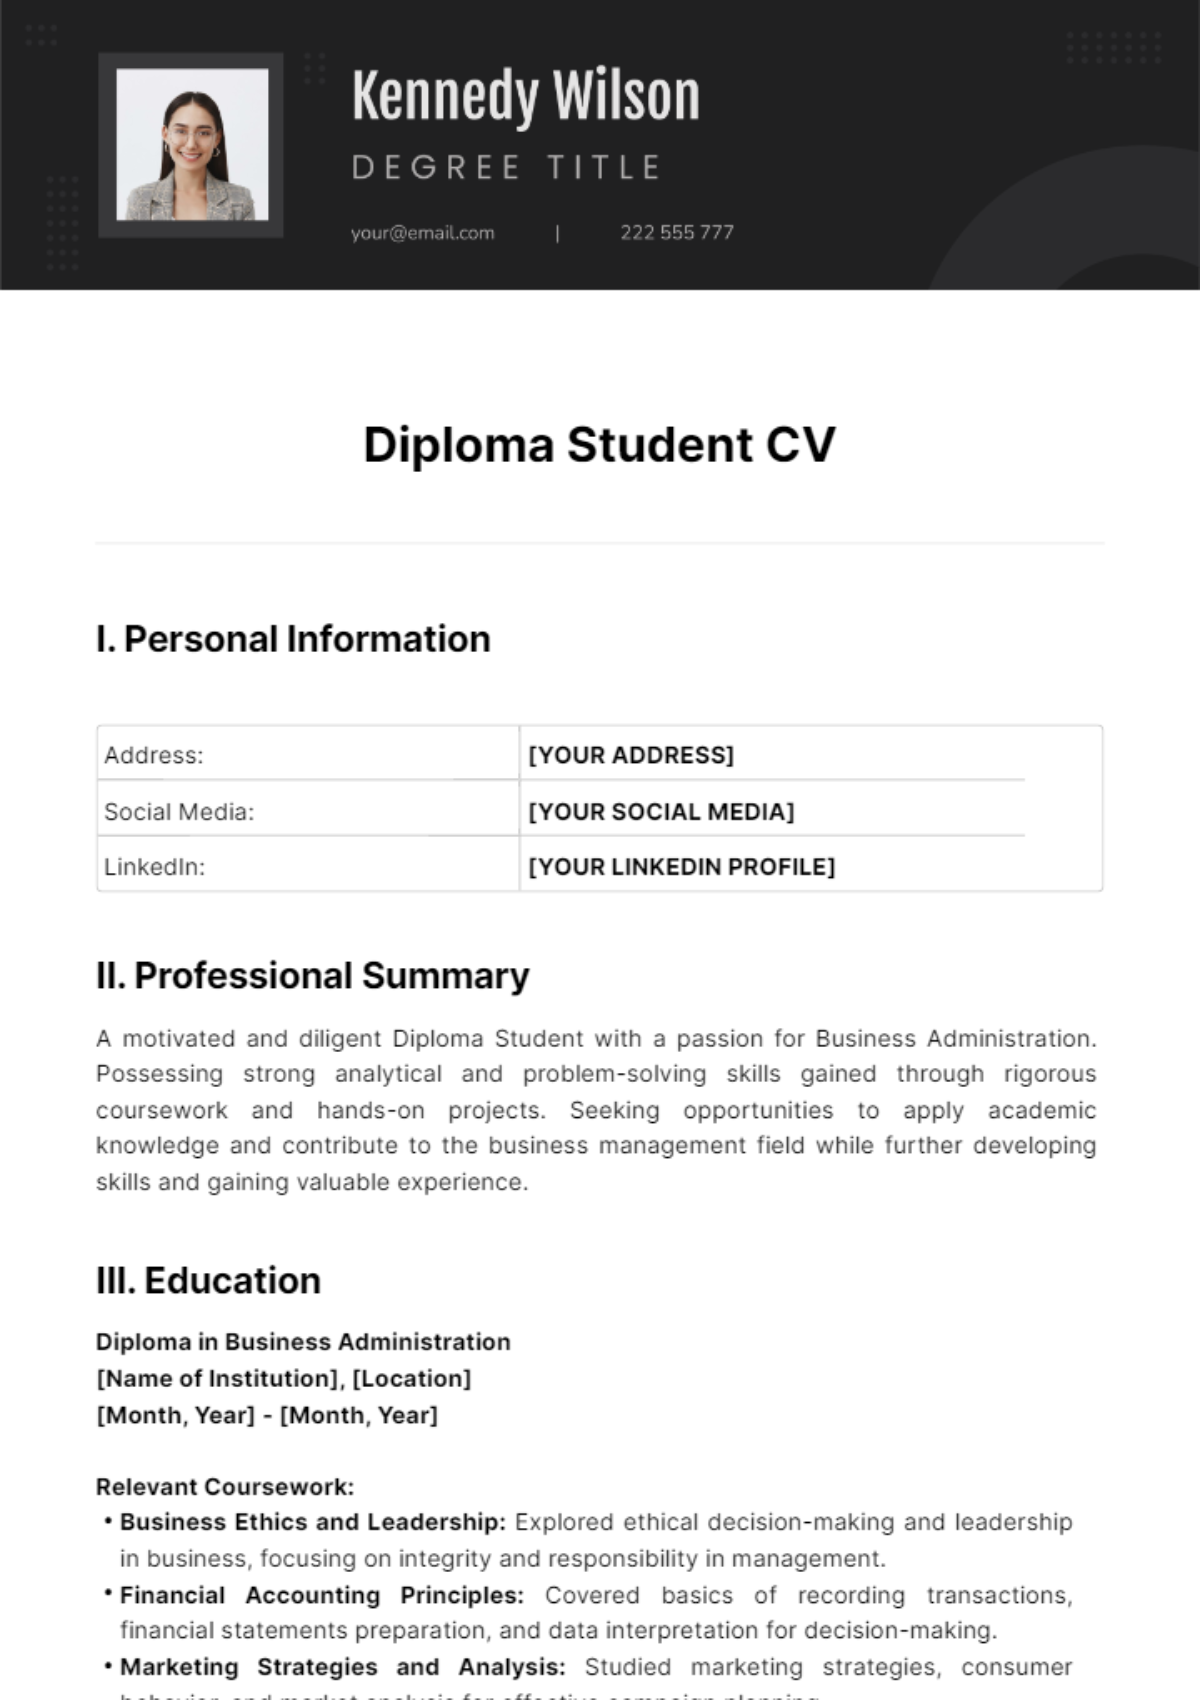 Diploma Student CV Template